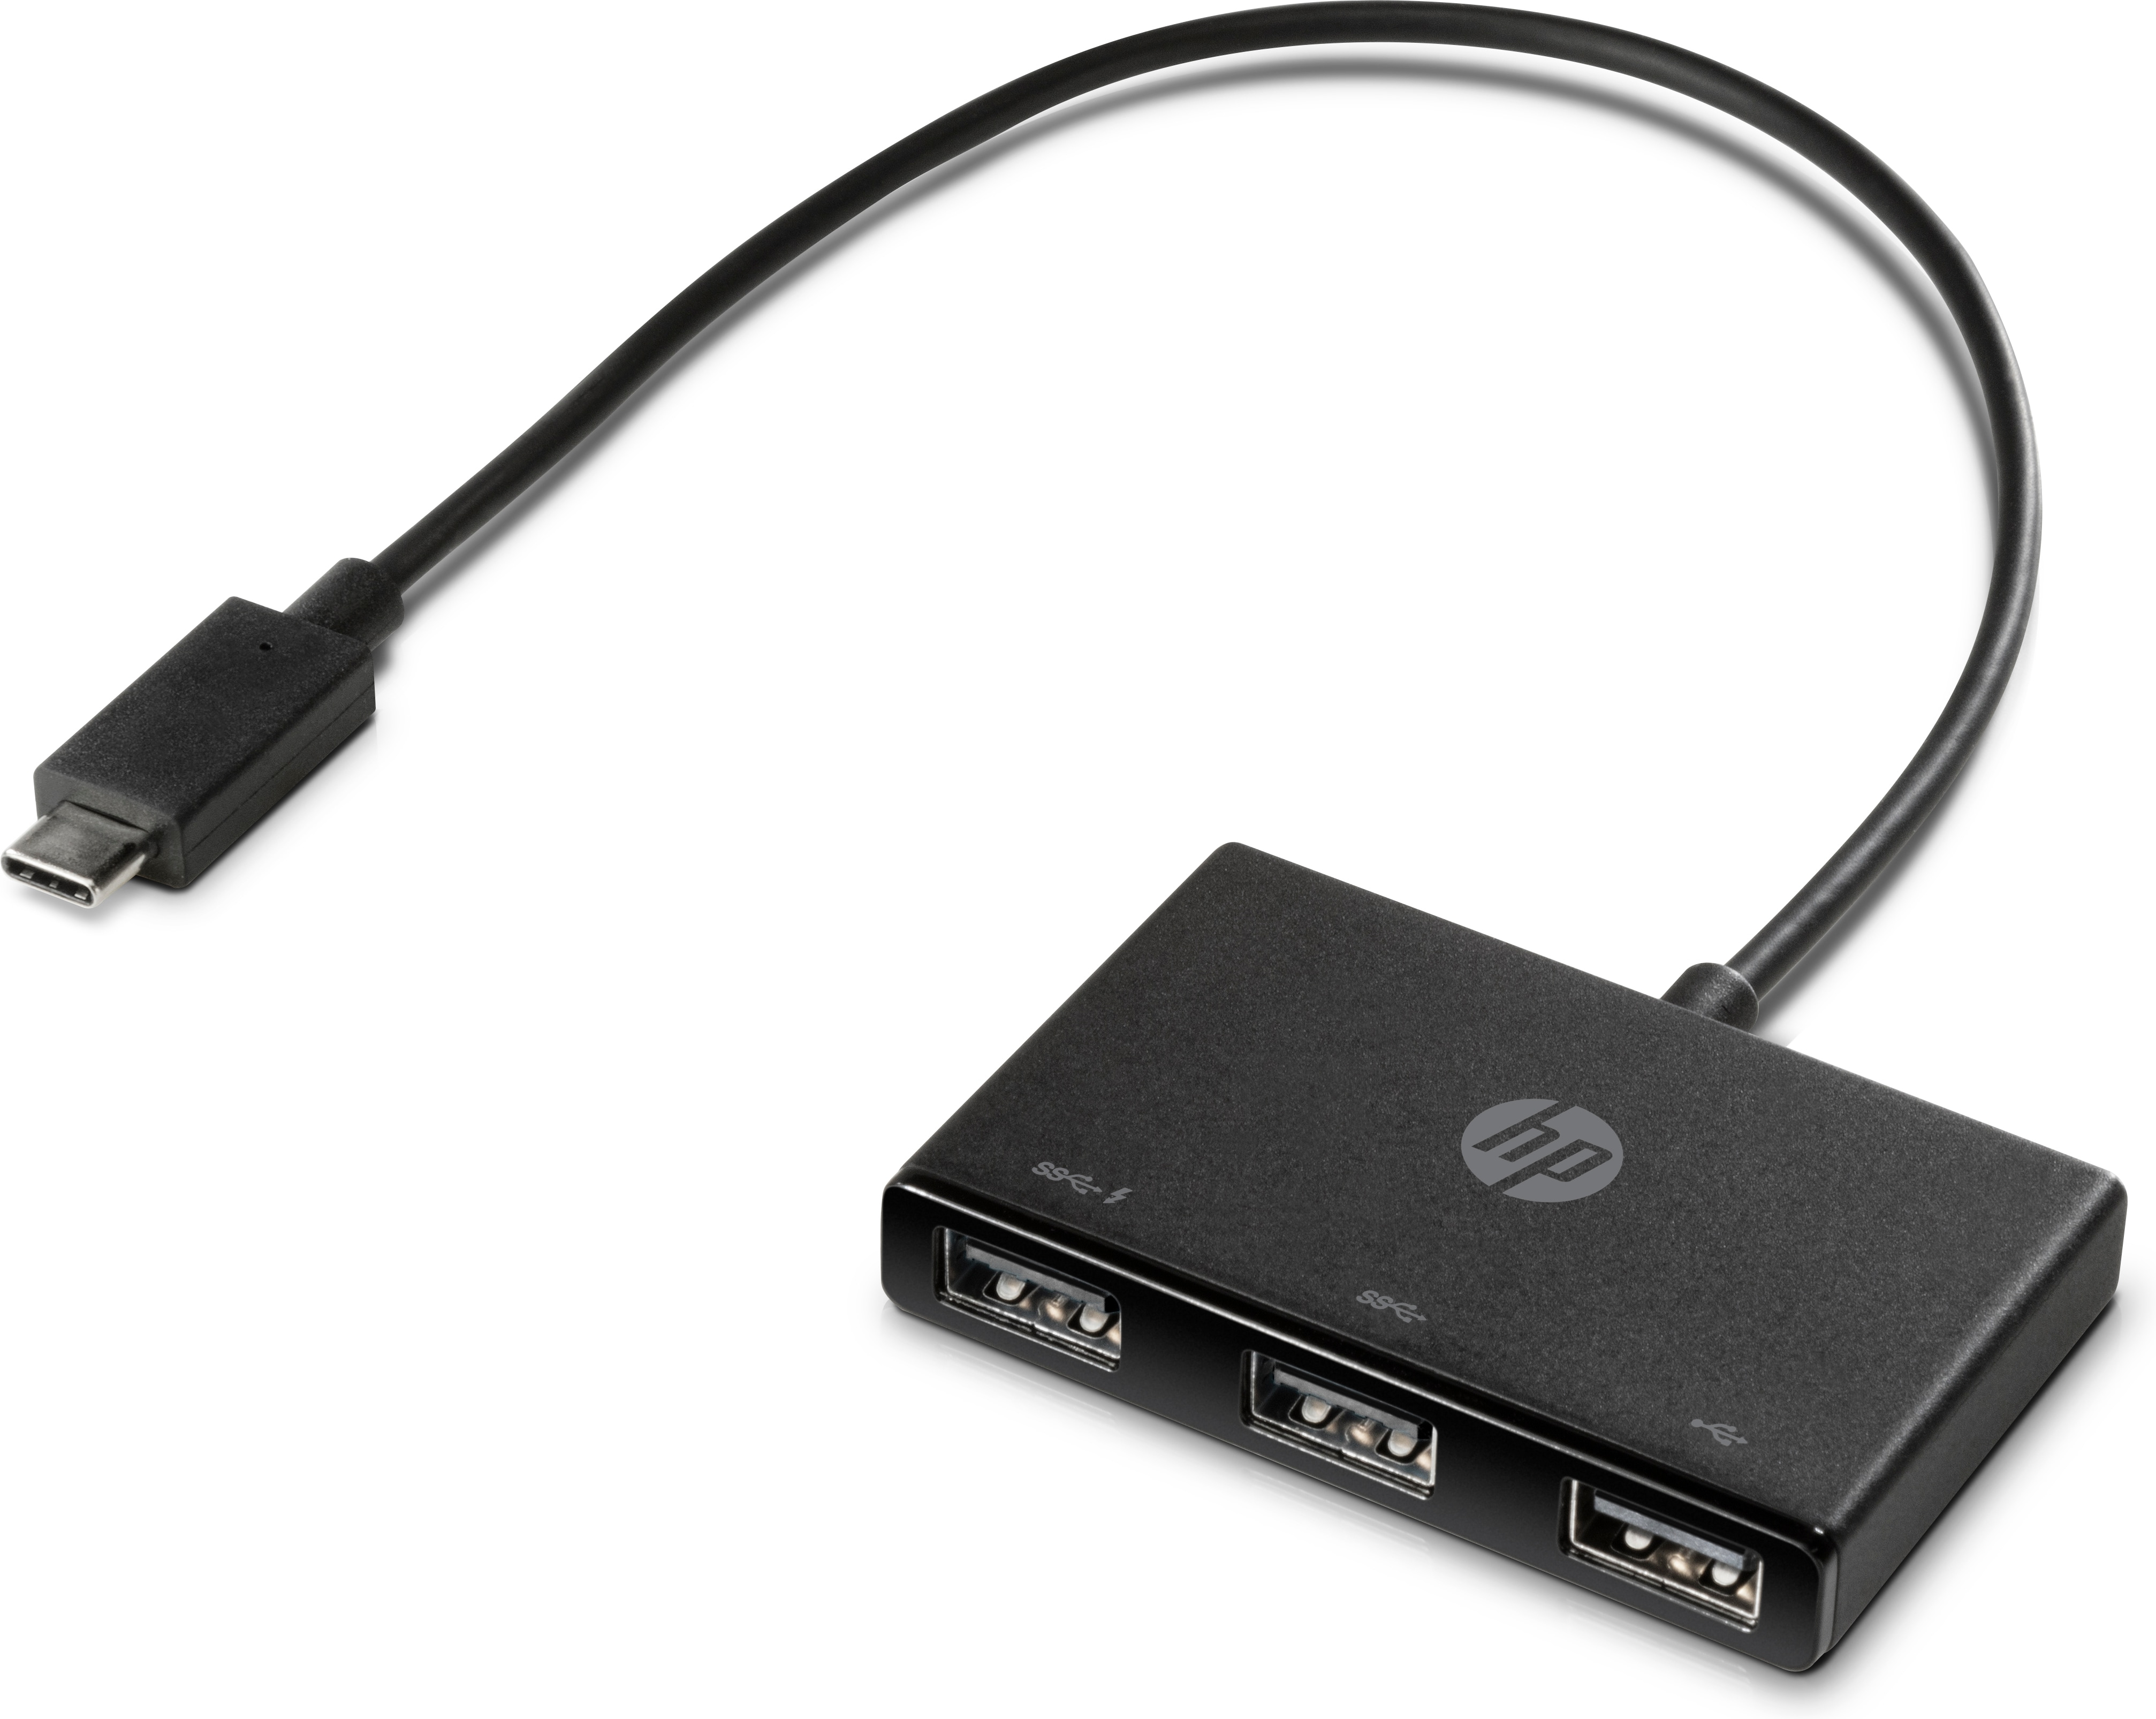 HP USB-C to USB-A